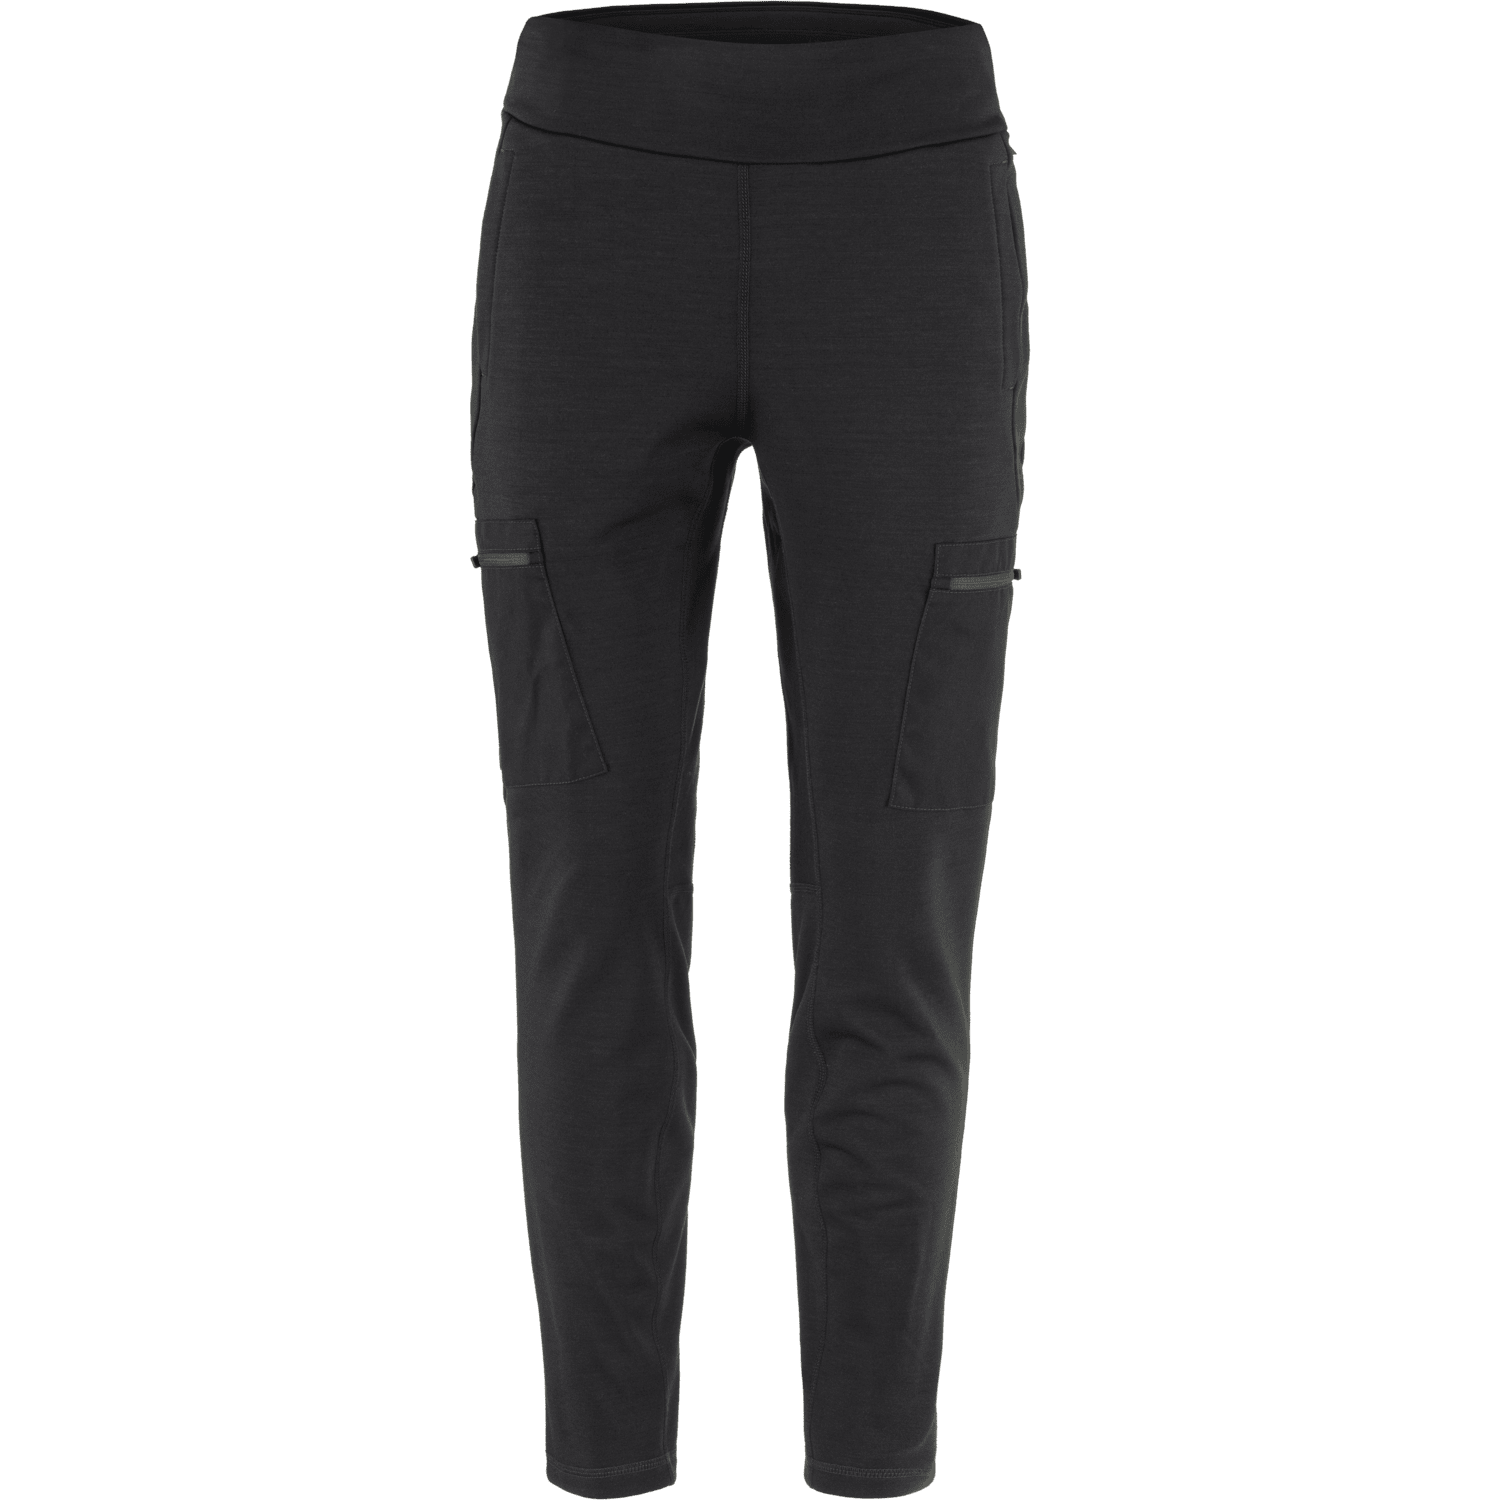 Fjällräven - W's Keb Fleece Trousers - Recycled polyester & Organic cotton - Weekendbee - sustainable sportswear